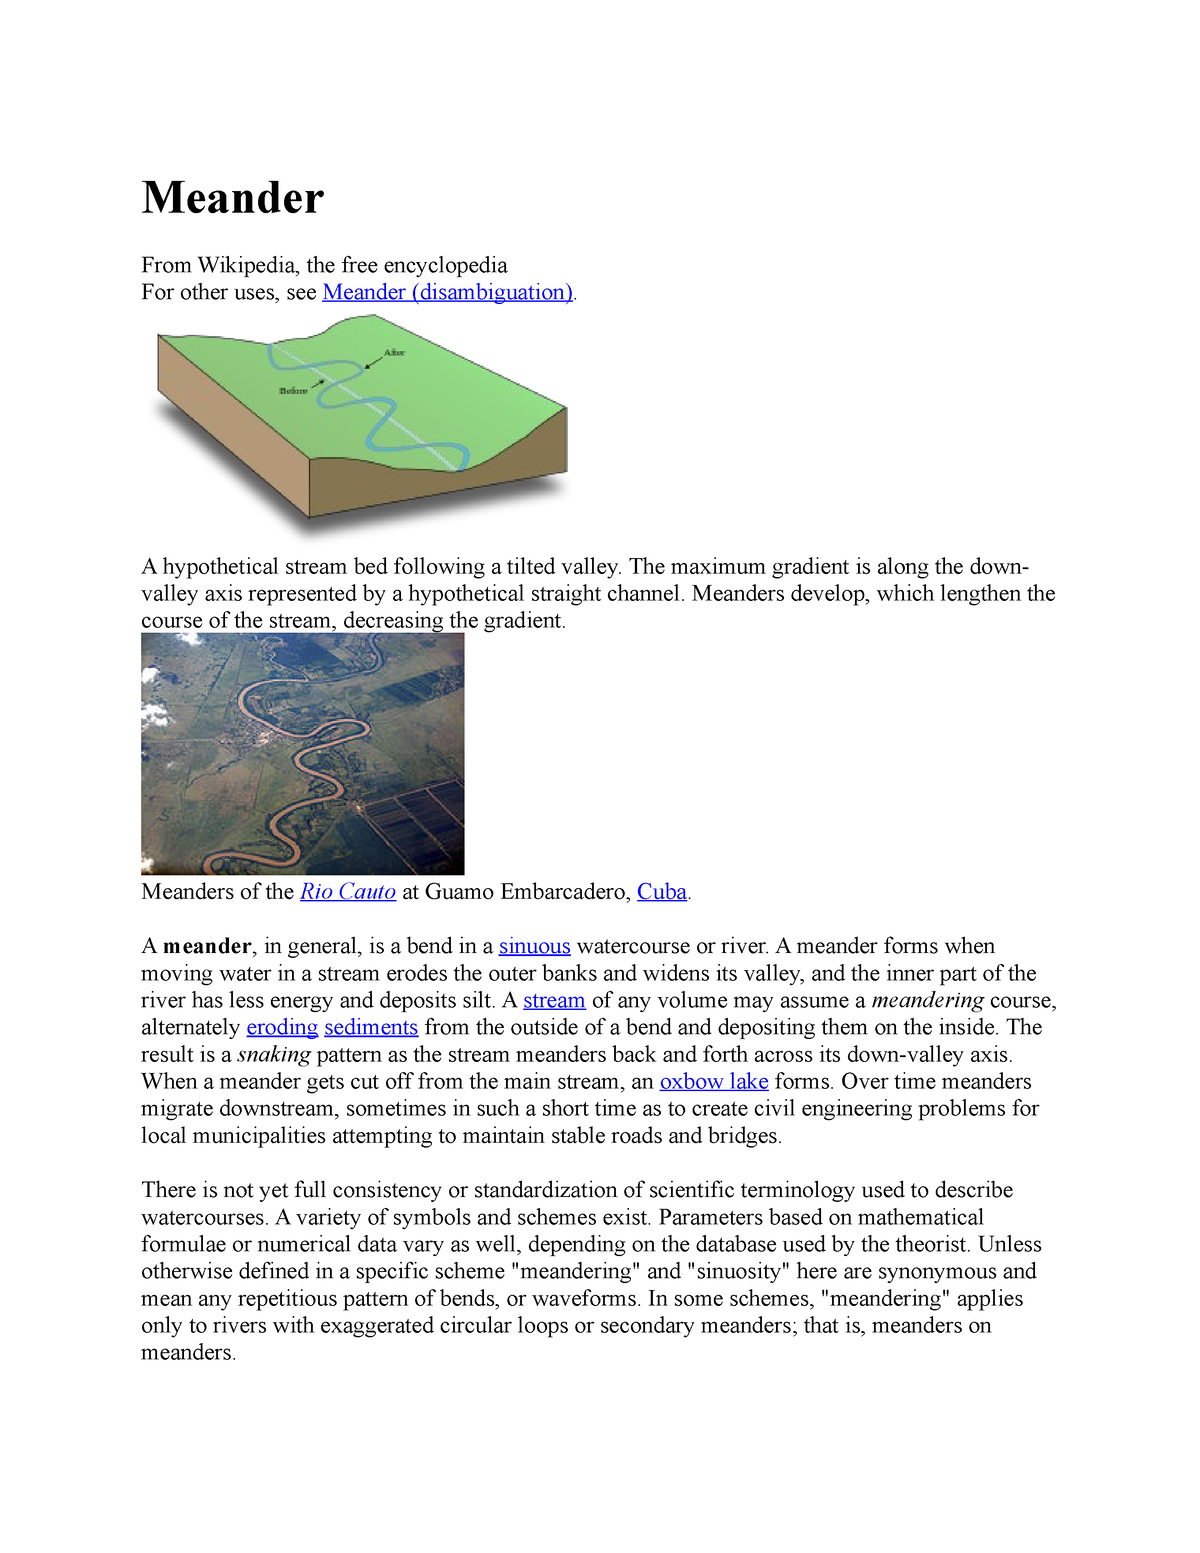 Meander - Wikipedia